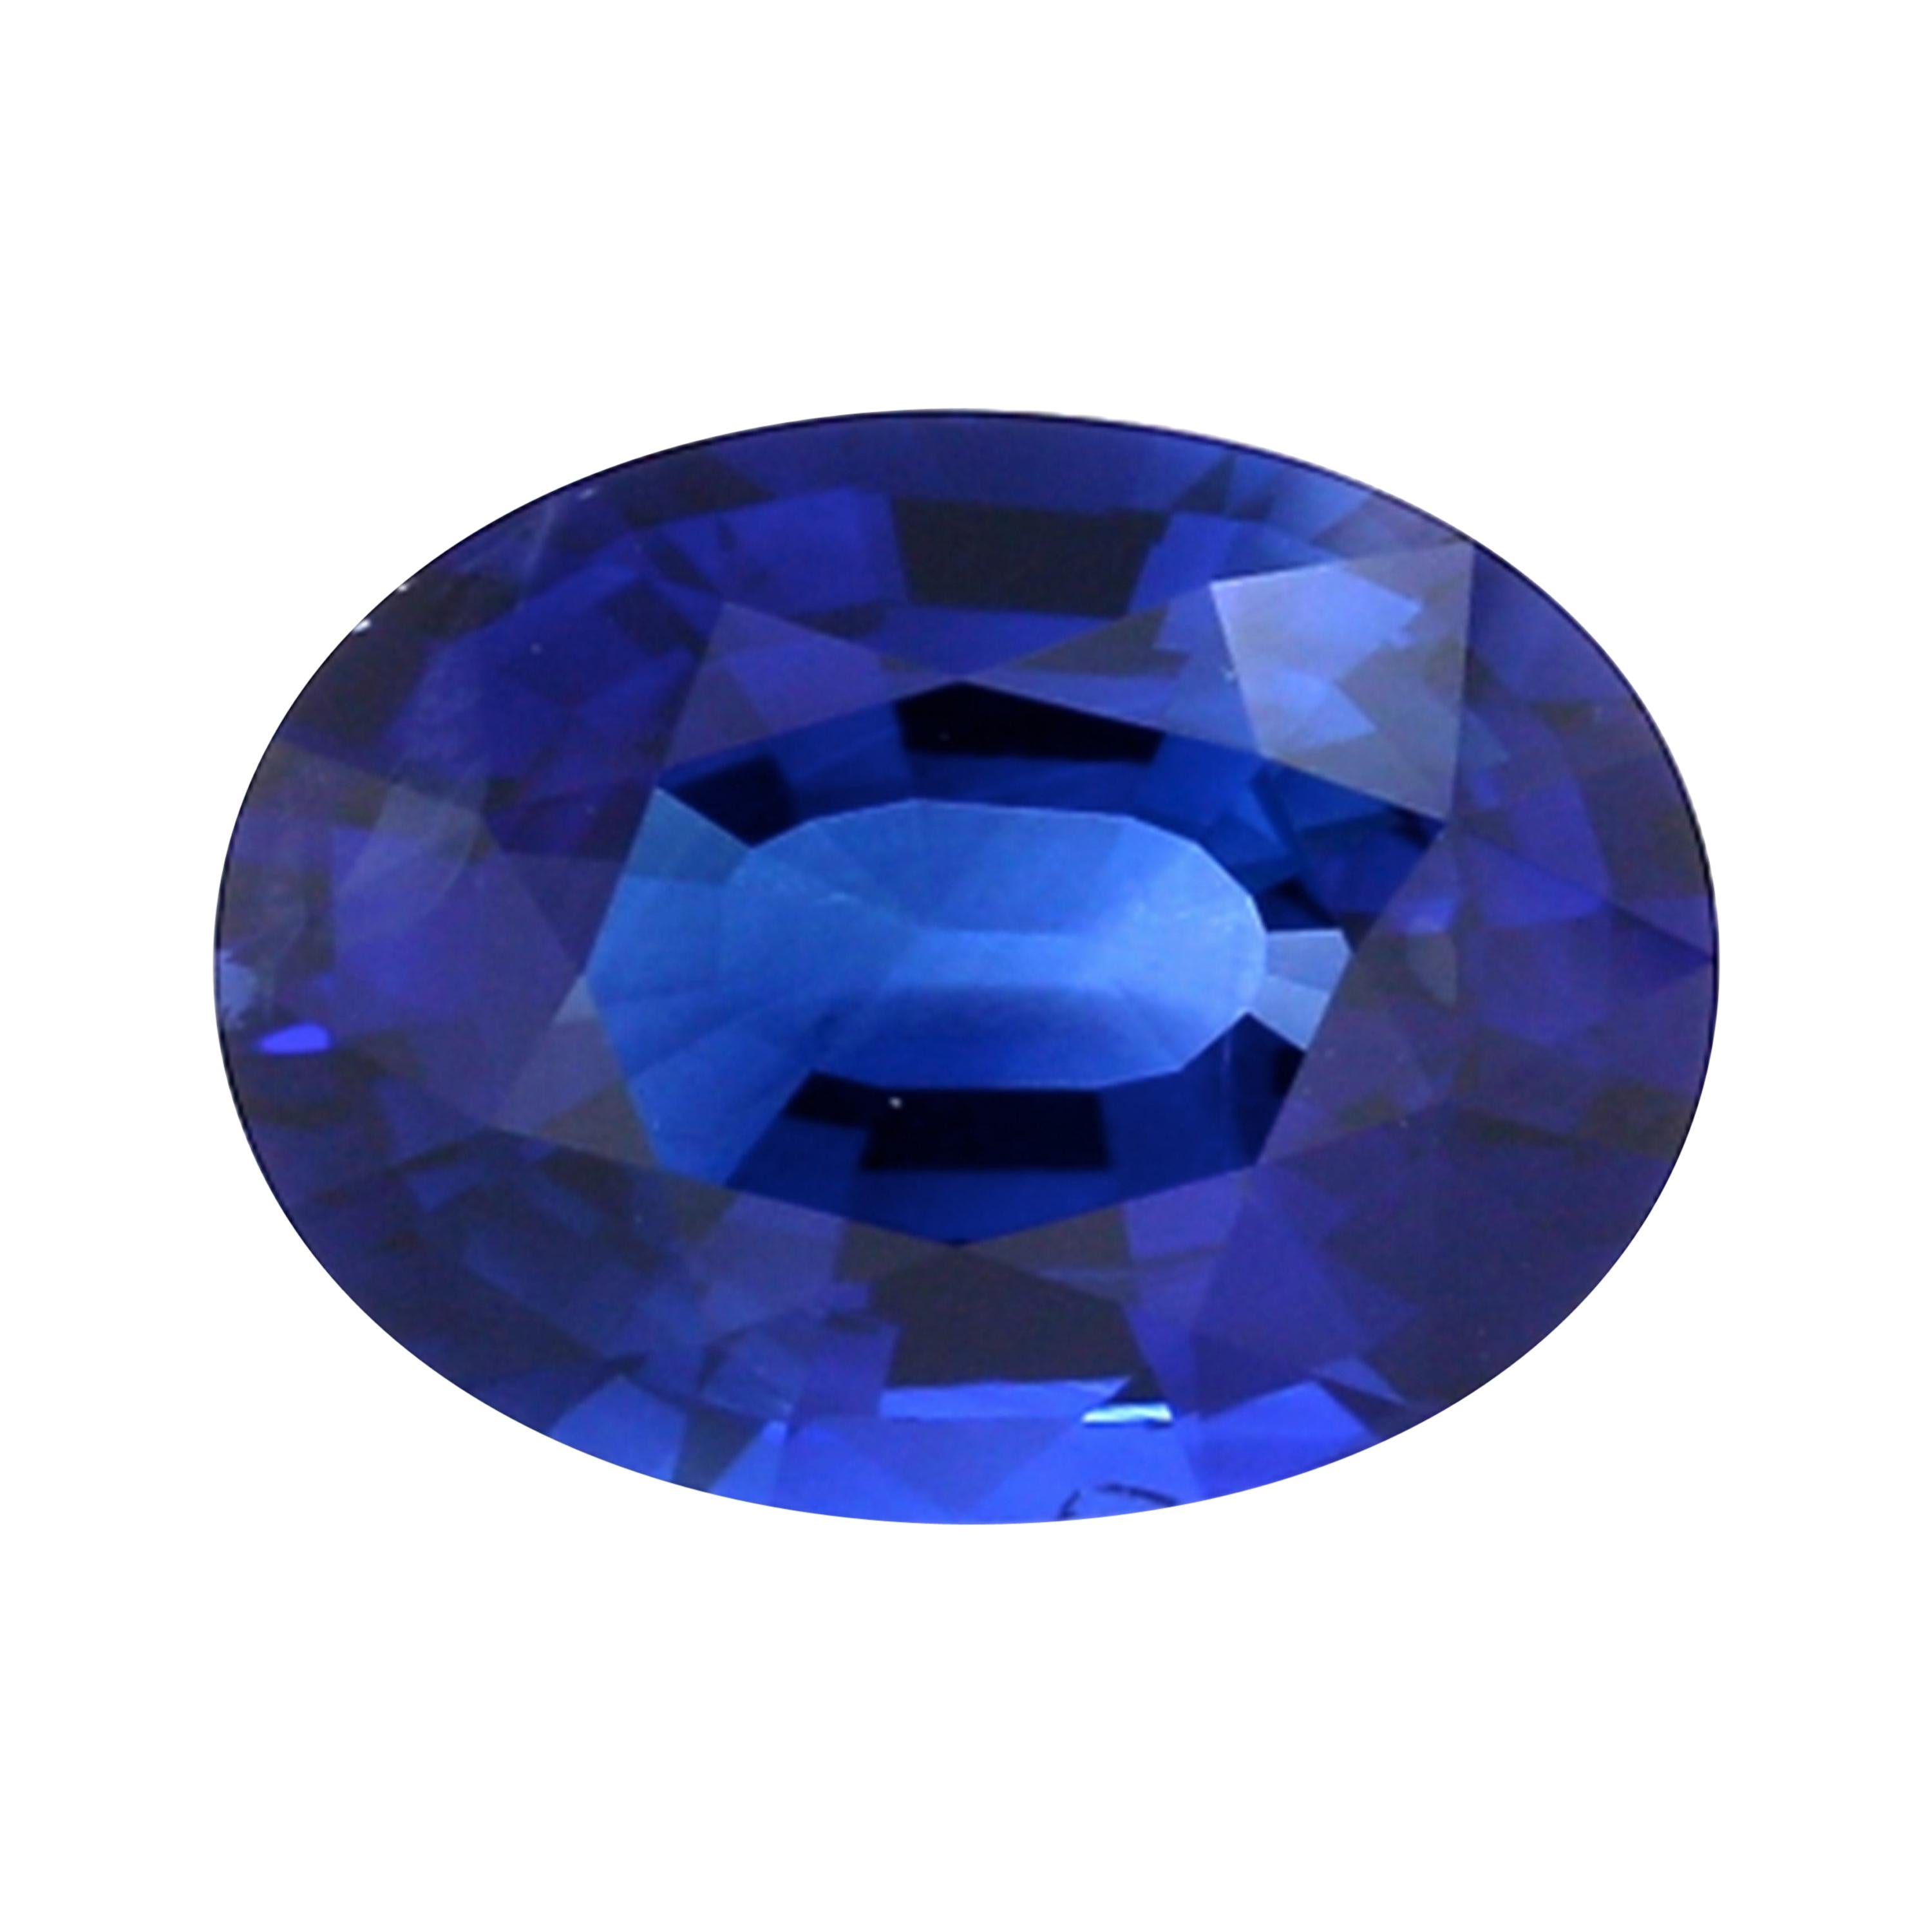 Saphir ovale bleu royal certifié GRS de 3,80 carats